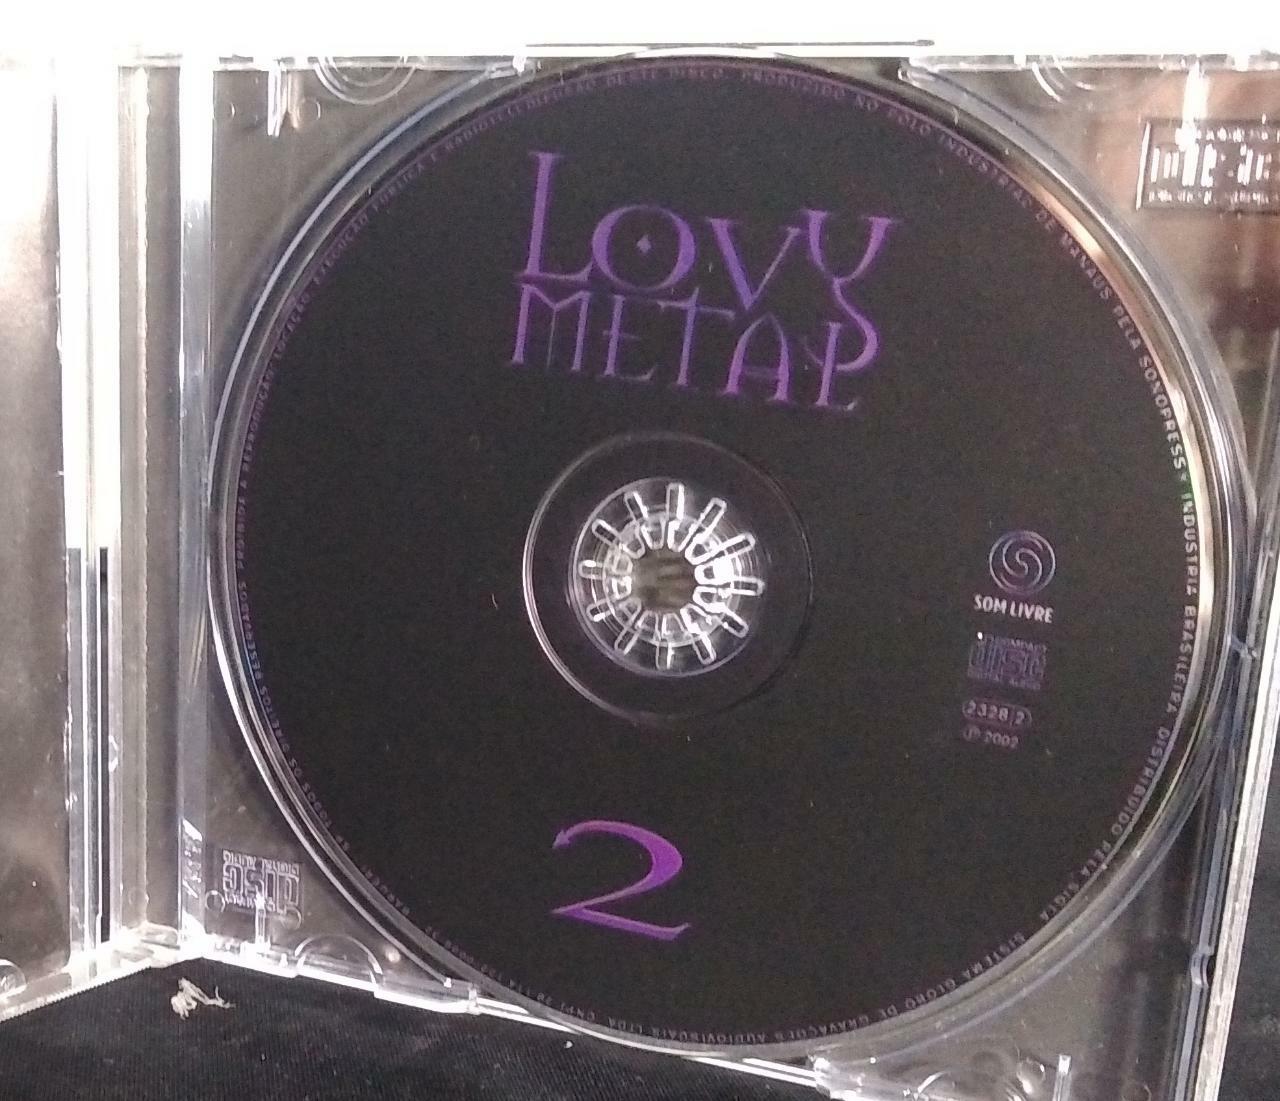 CD - Lovy Metal - 2